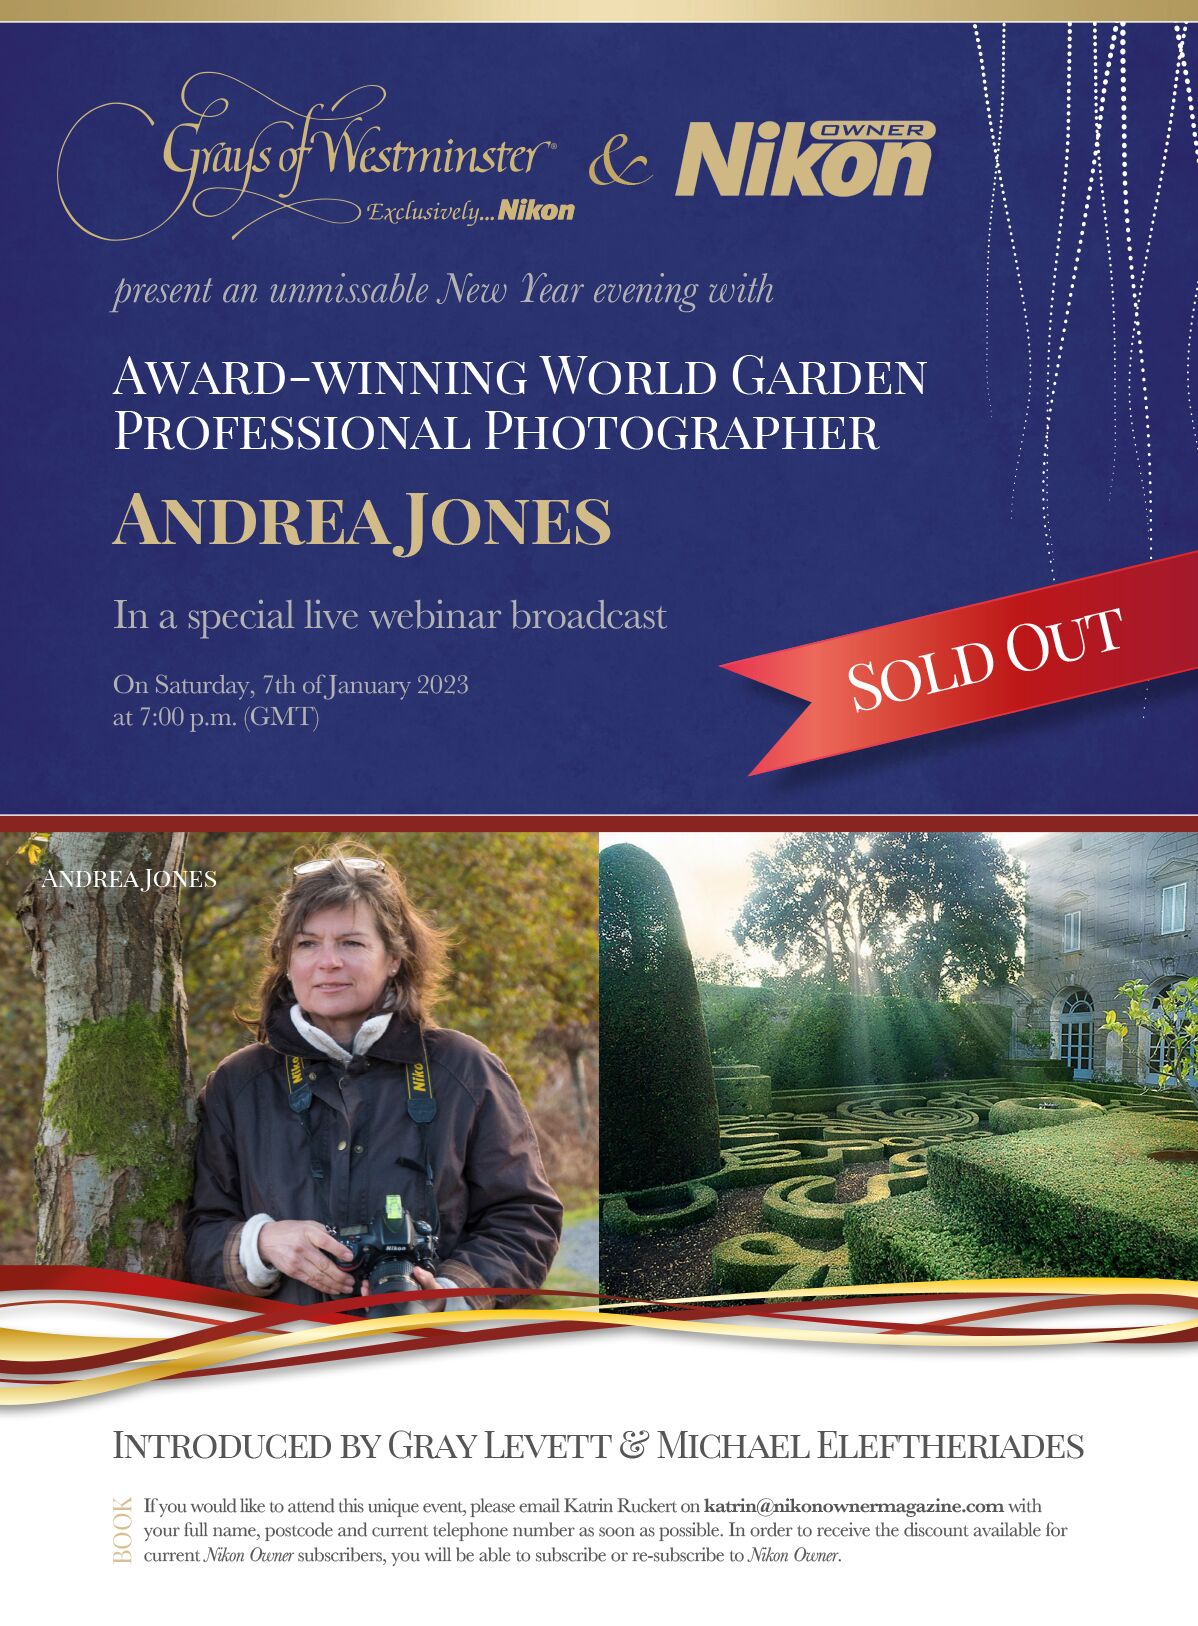 Award-winning World Garden Professional Photographer Andrea Jones